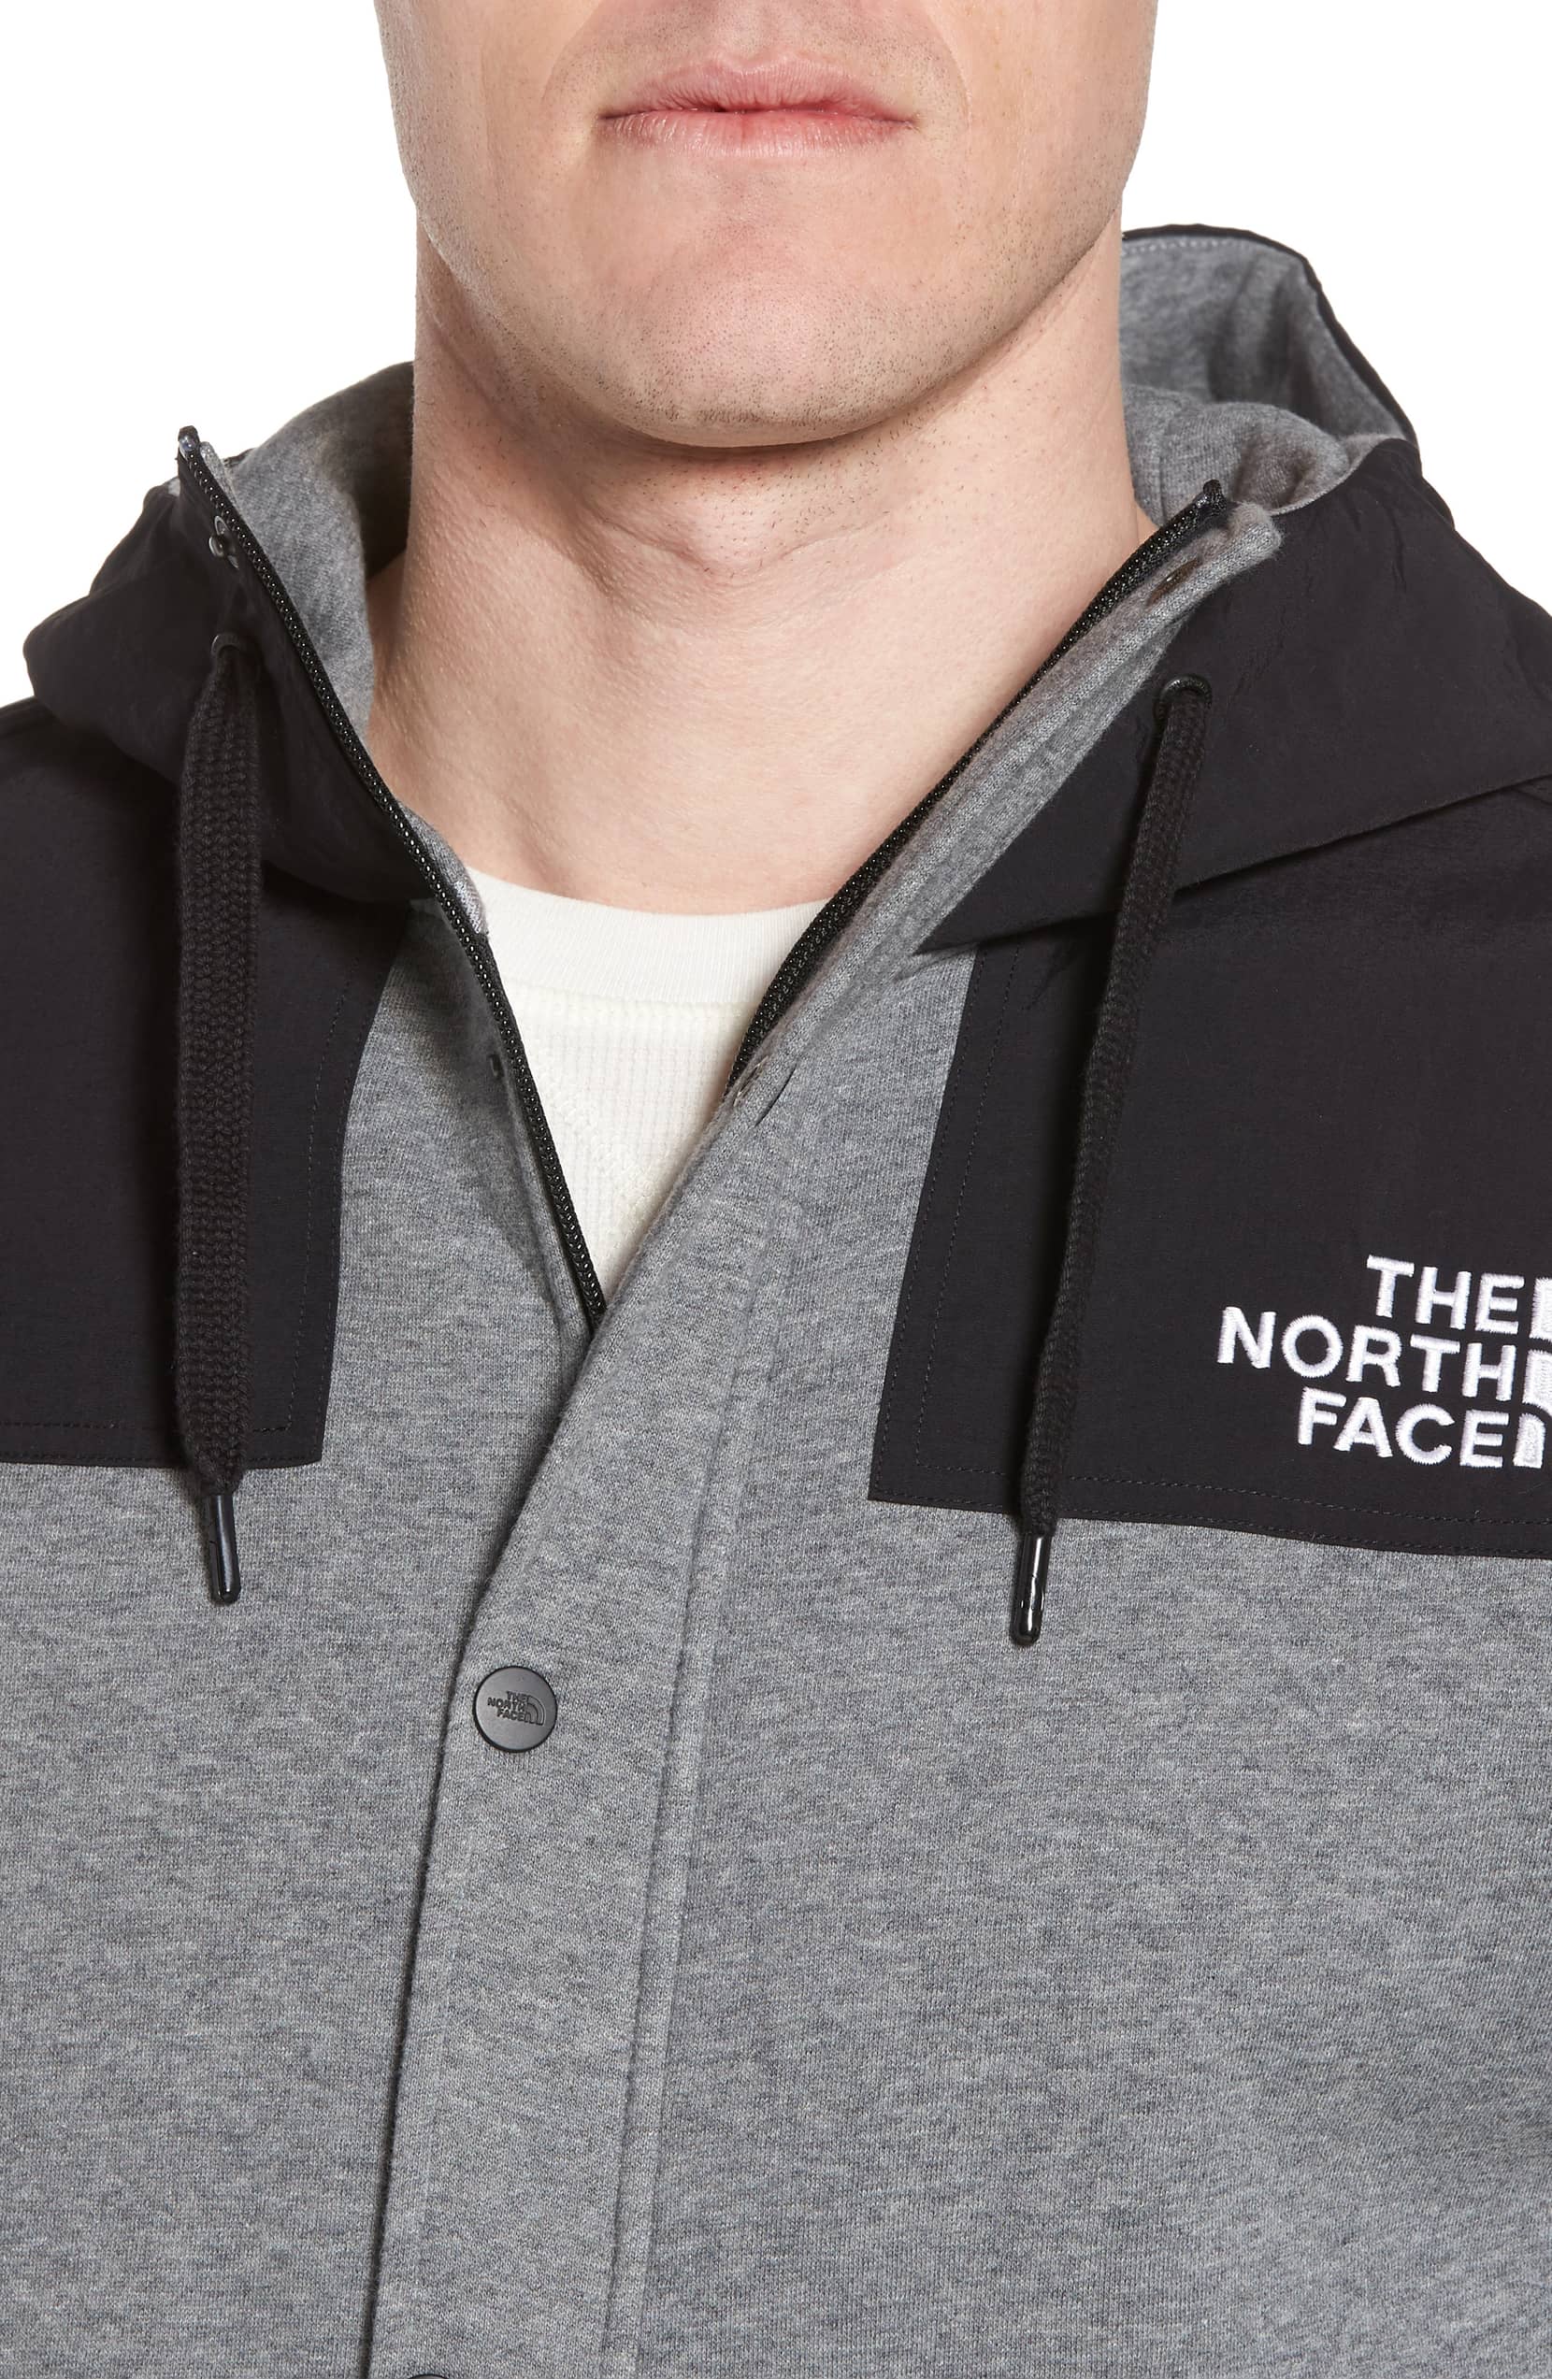 The North Face Men’s Rivington Jacket II The North Face ktmart.vn 8